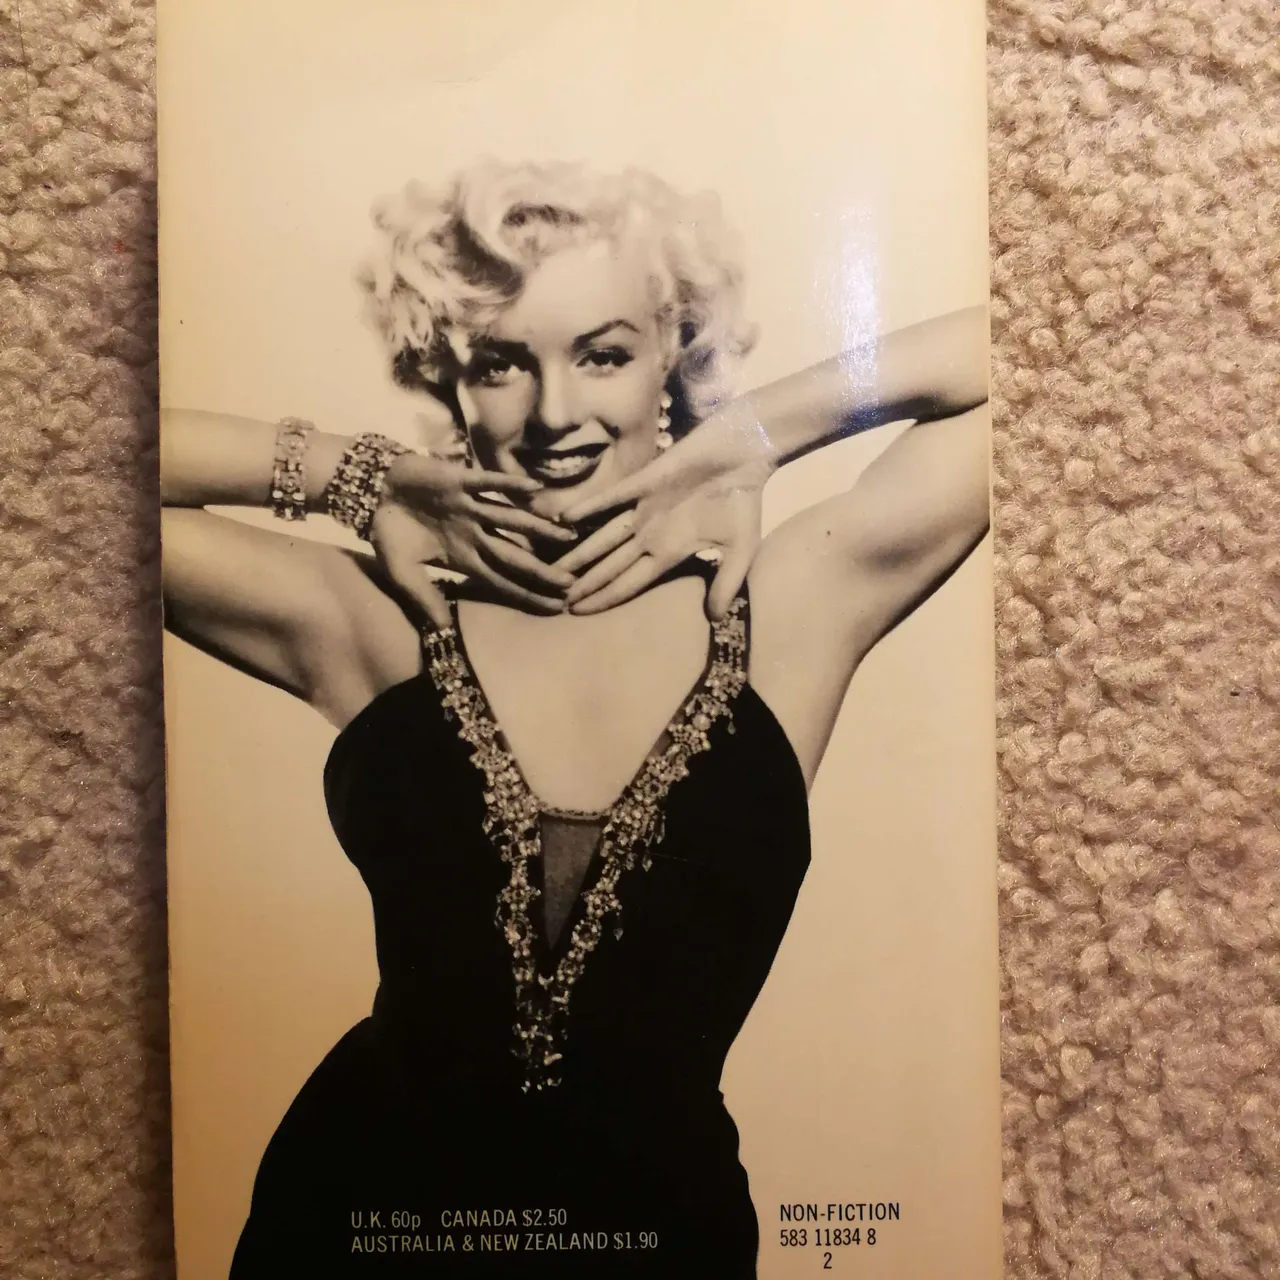 *FREE Biography of Marilyn Monroe
free photo 5